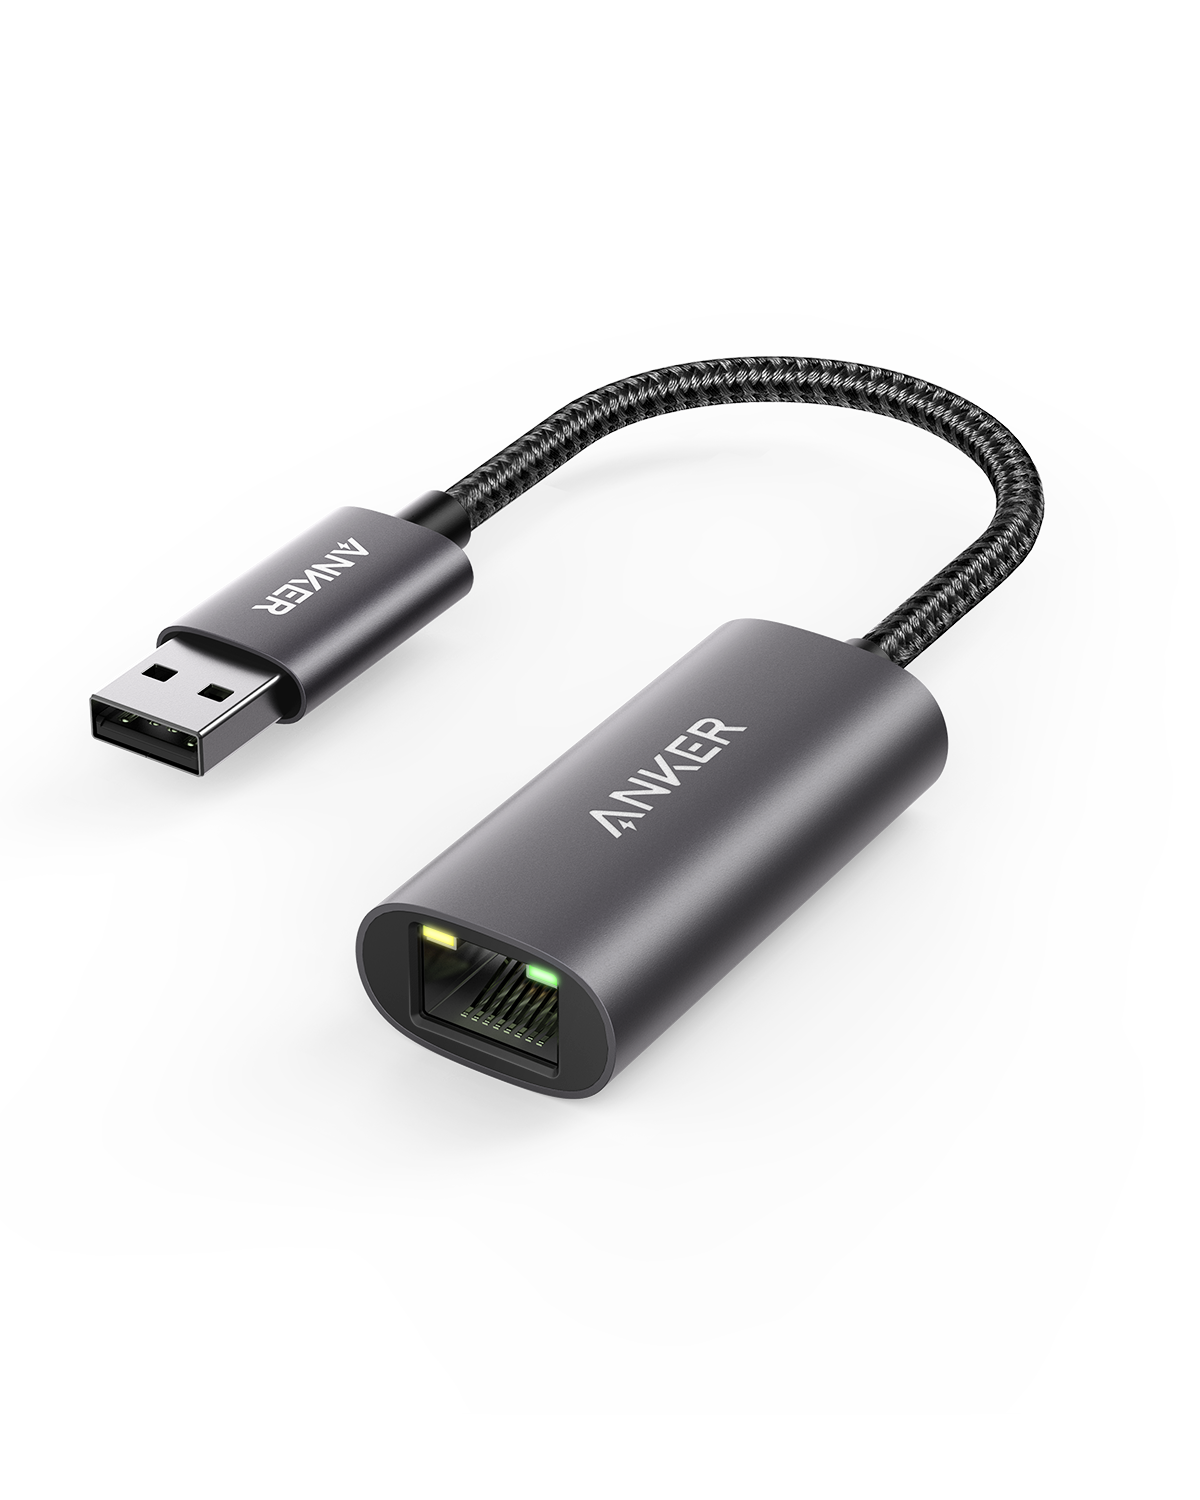 PowerExpand USB 3.0 to Gigabit Ethernet Adapter - Anker US